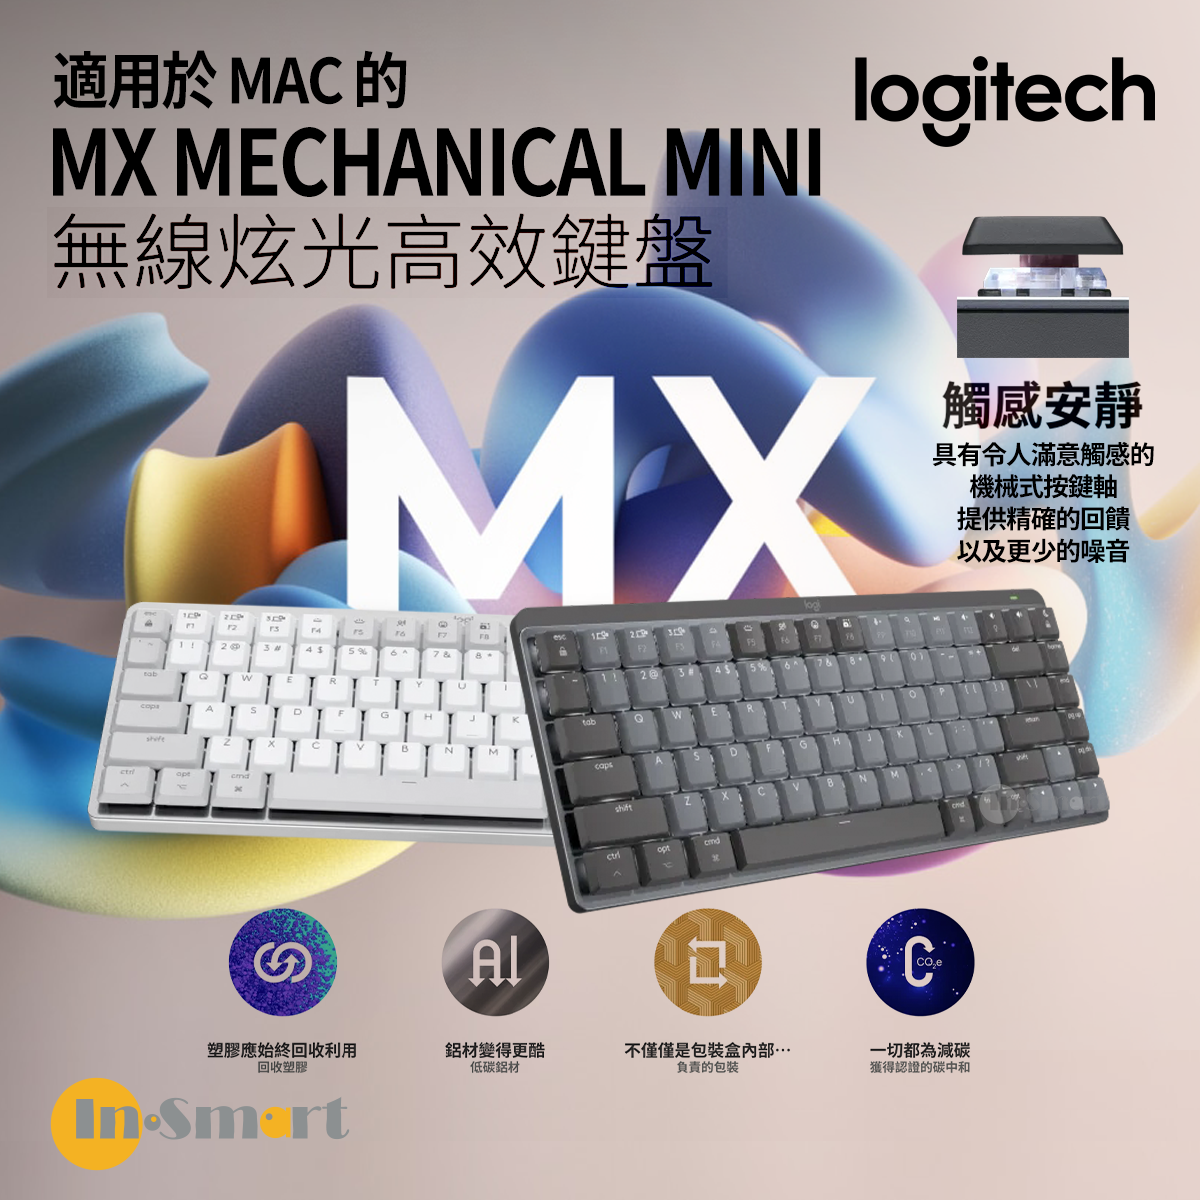 MX Mechanical Mini Wireless Keyboard